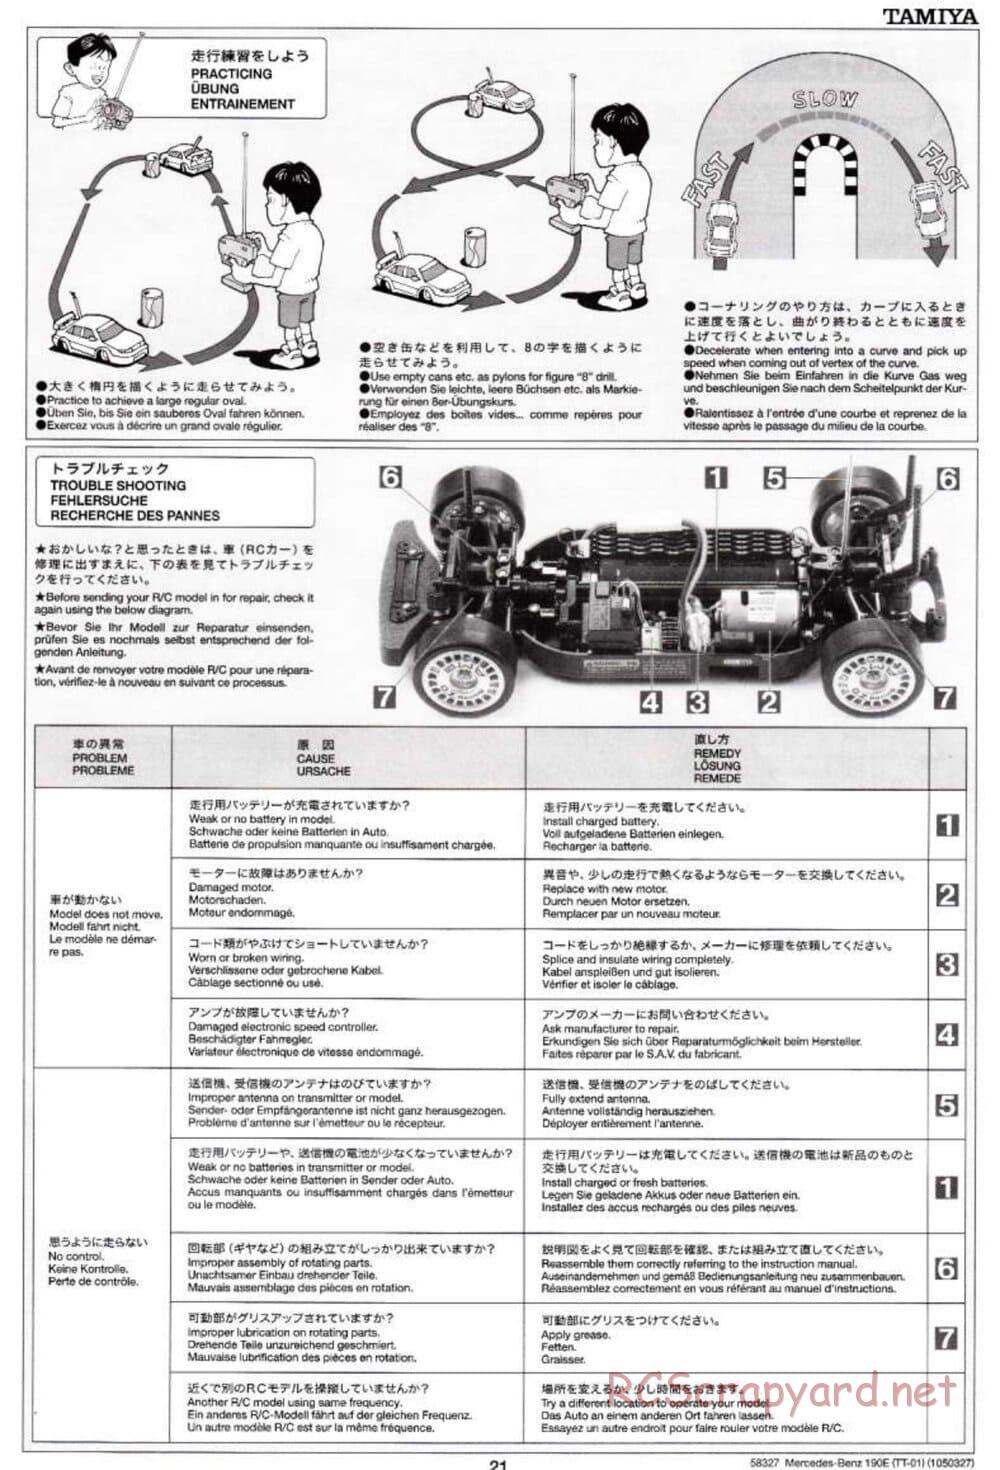 Tamiya - Mercedes Benz 190E Evo.II AMG - TT-01 Chassis - Manual - Page 21